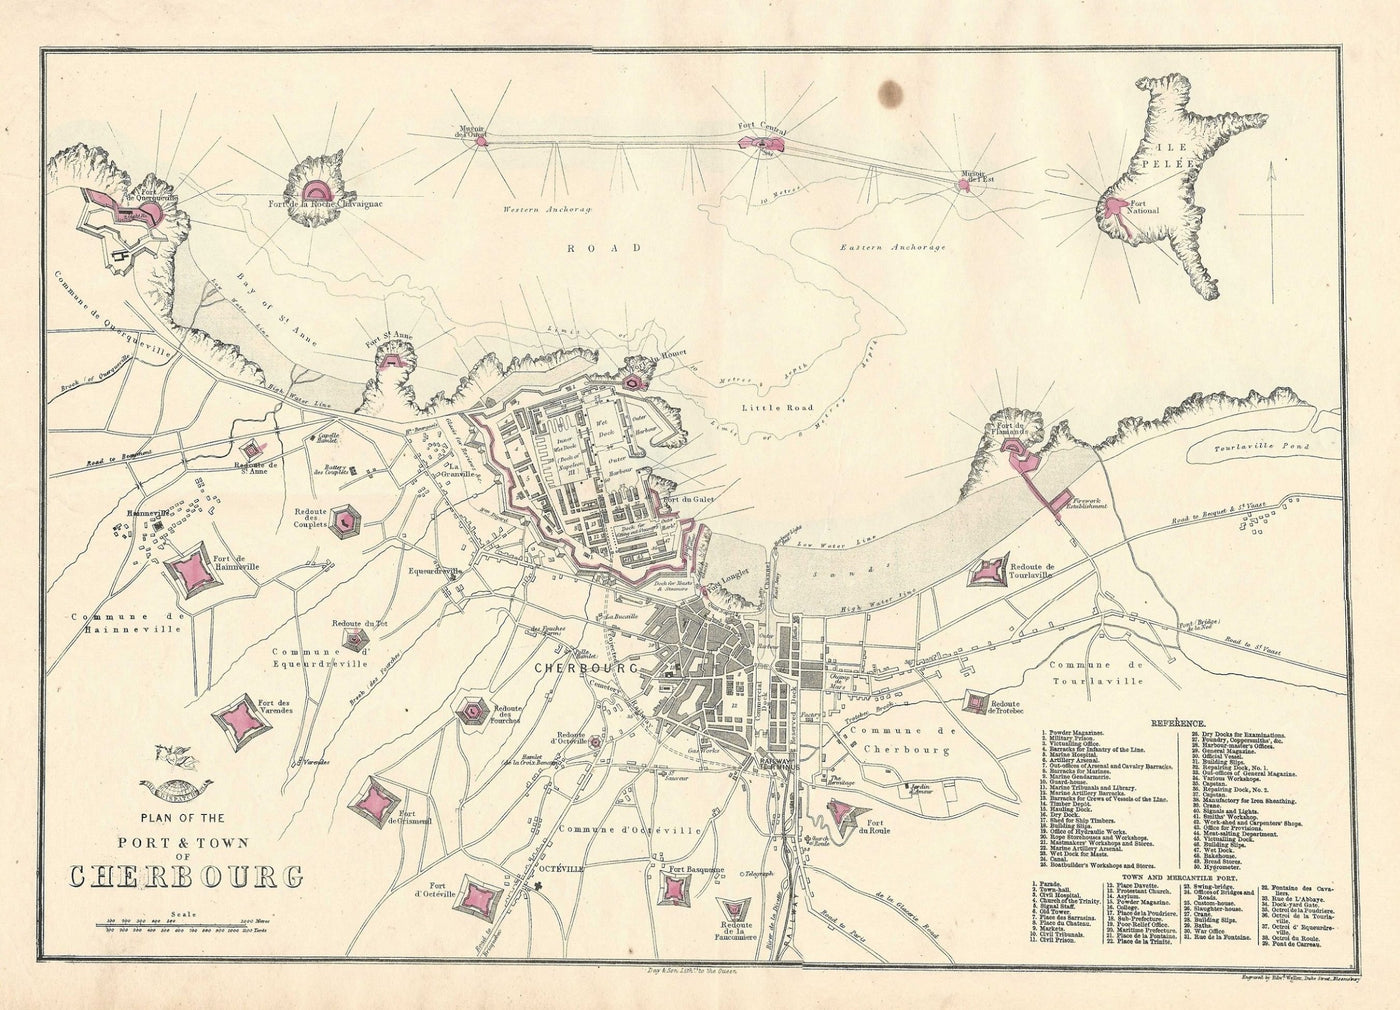 Cherbourg France antique town plan published 1863